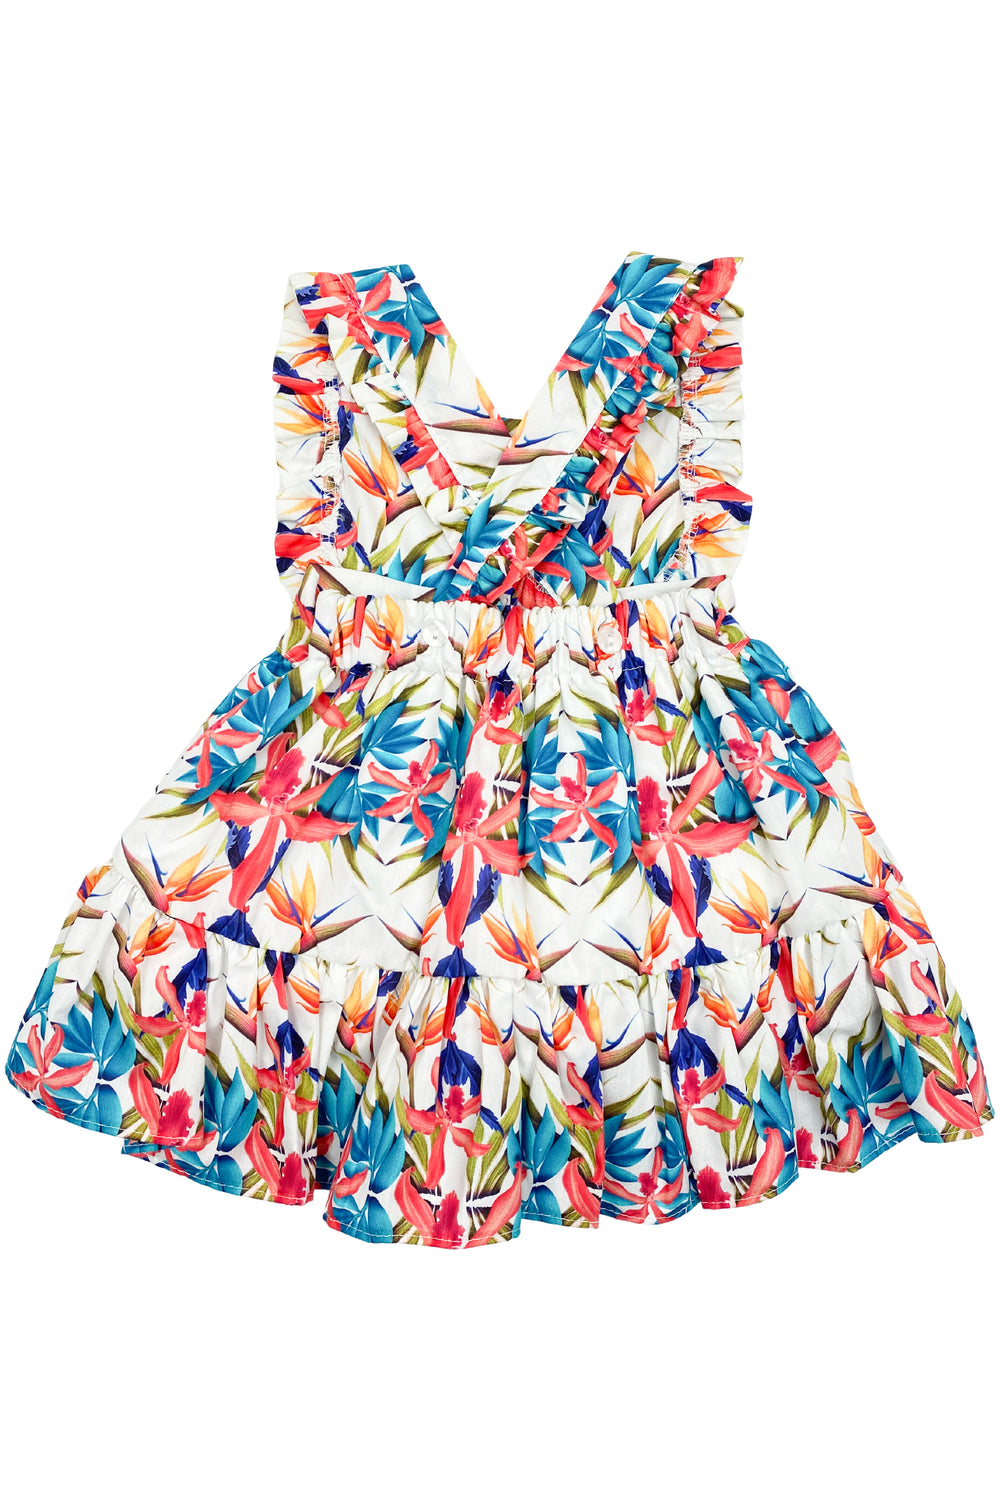 Valentina Bebes "Harper" Multicoloured Bird of Paradise Dress Set | iphoneandroidapplications